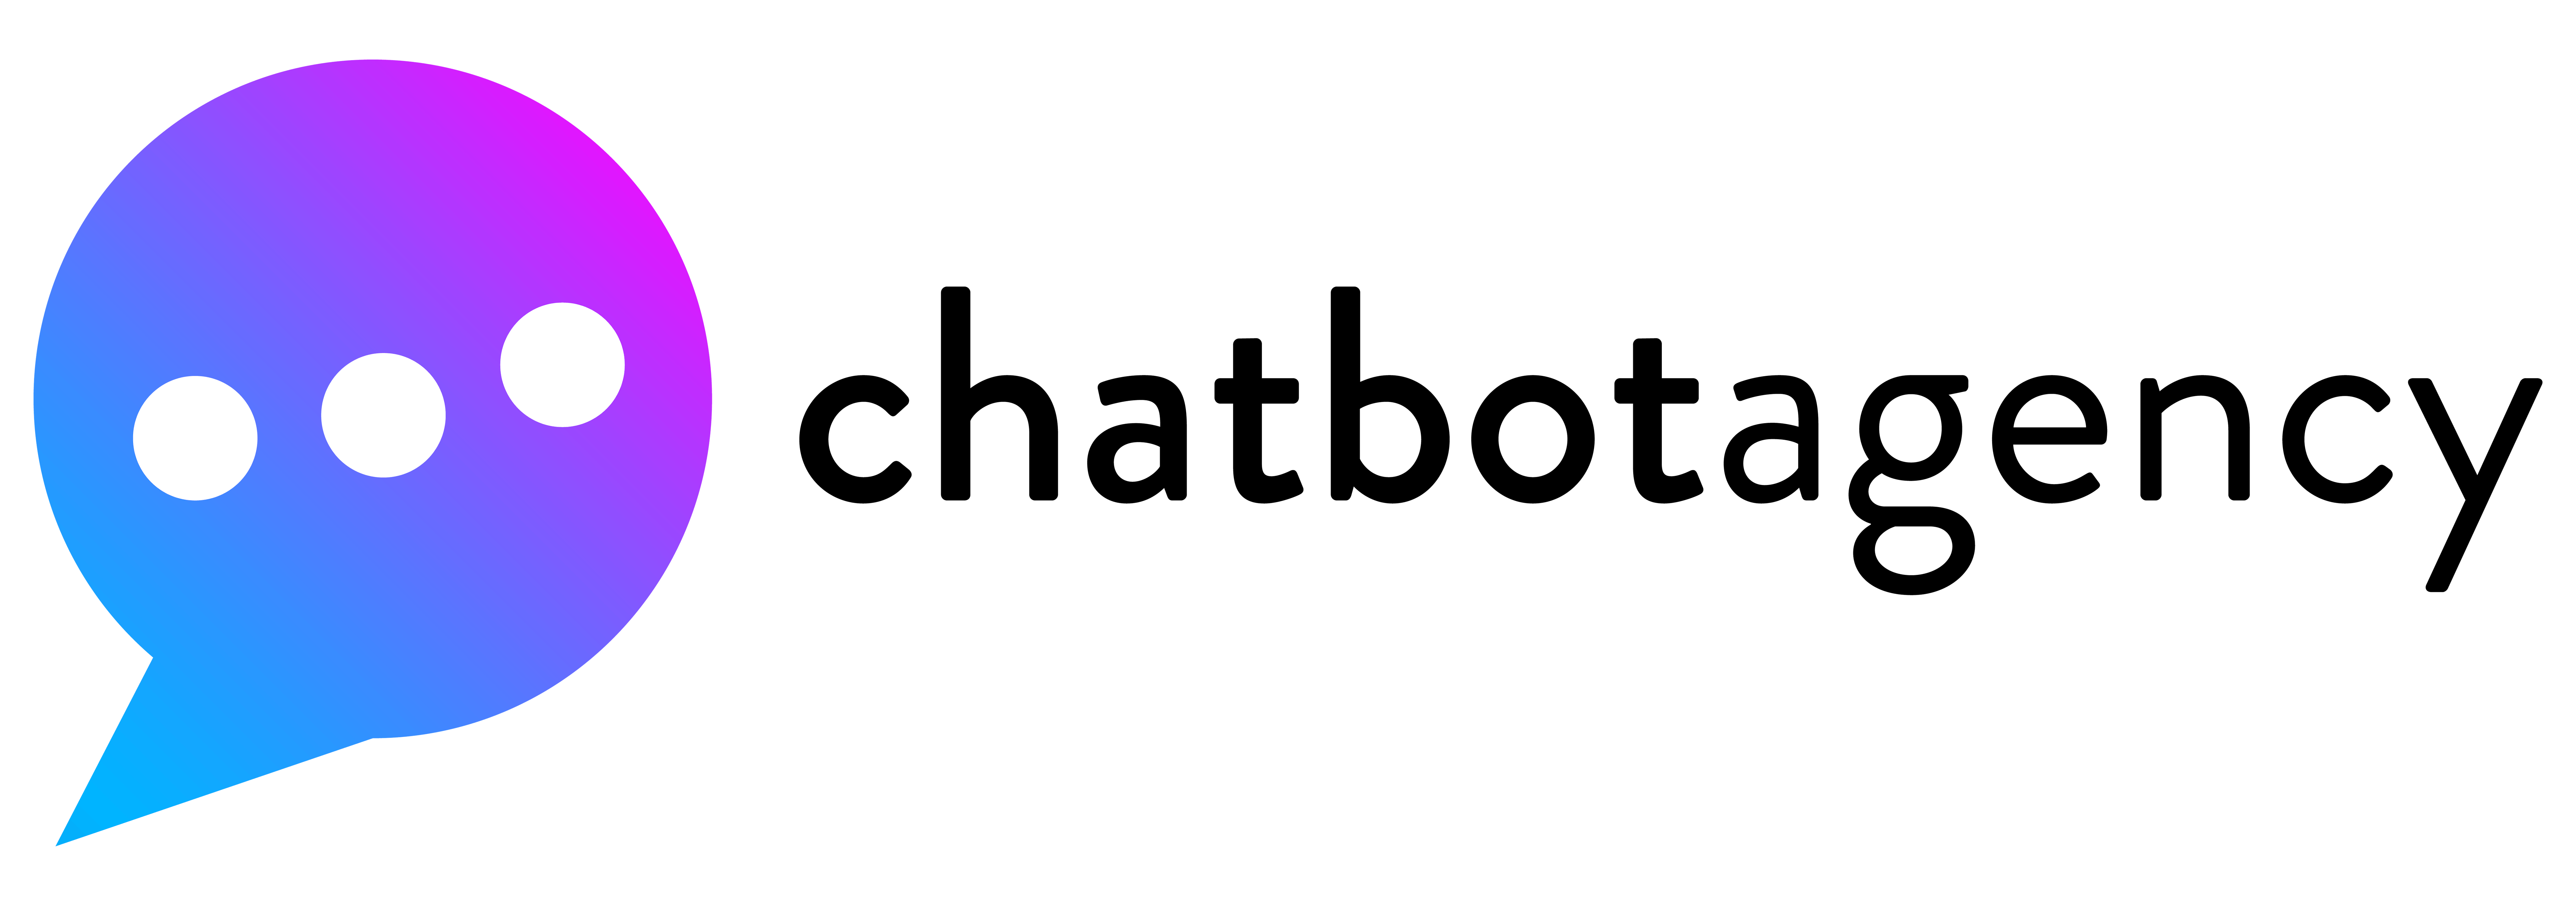 Our Team | Chatbot Agency | Brisbane